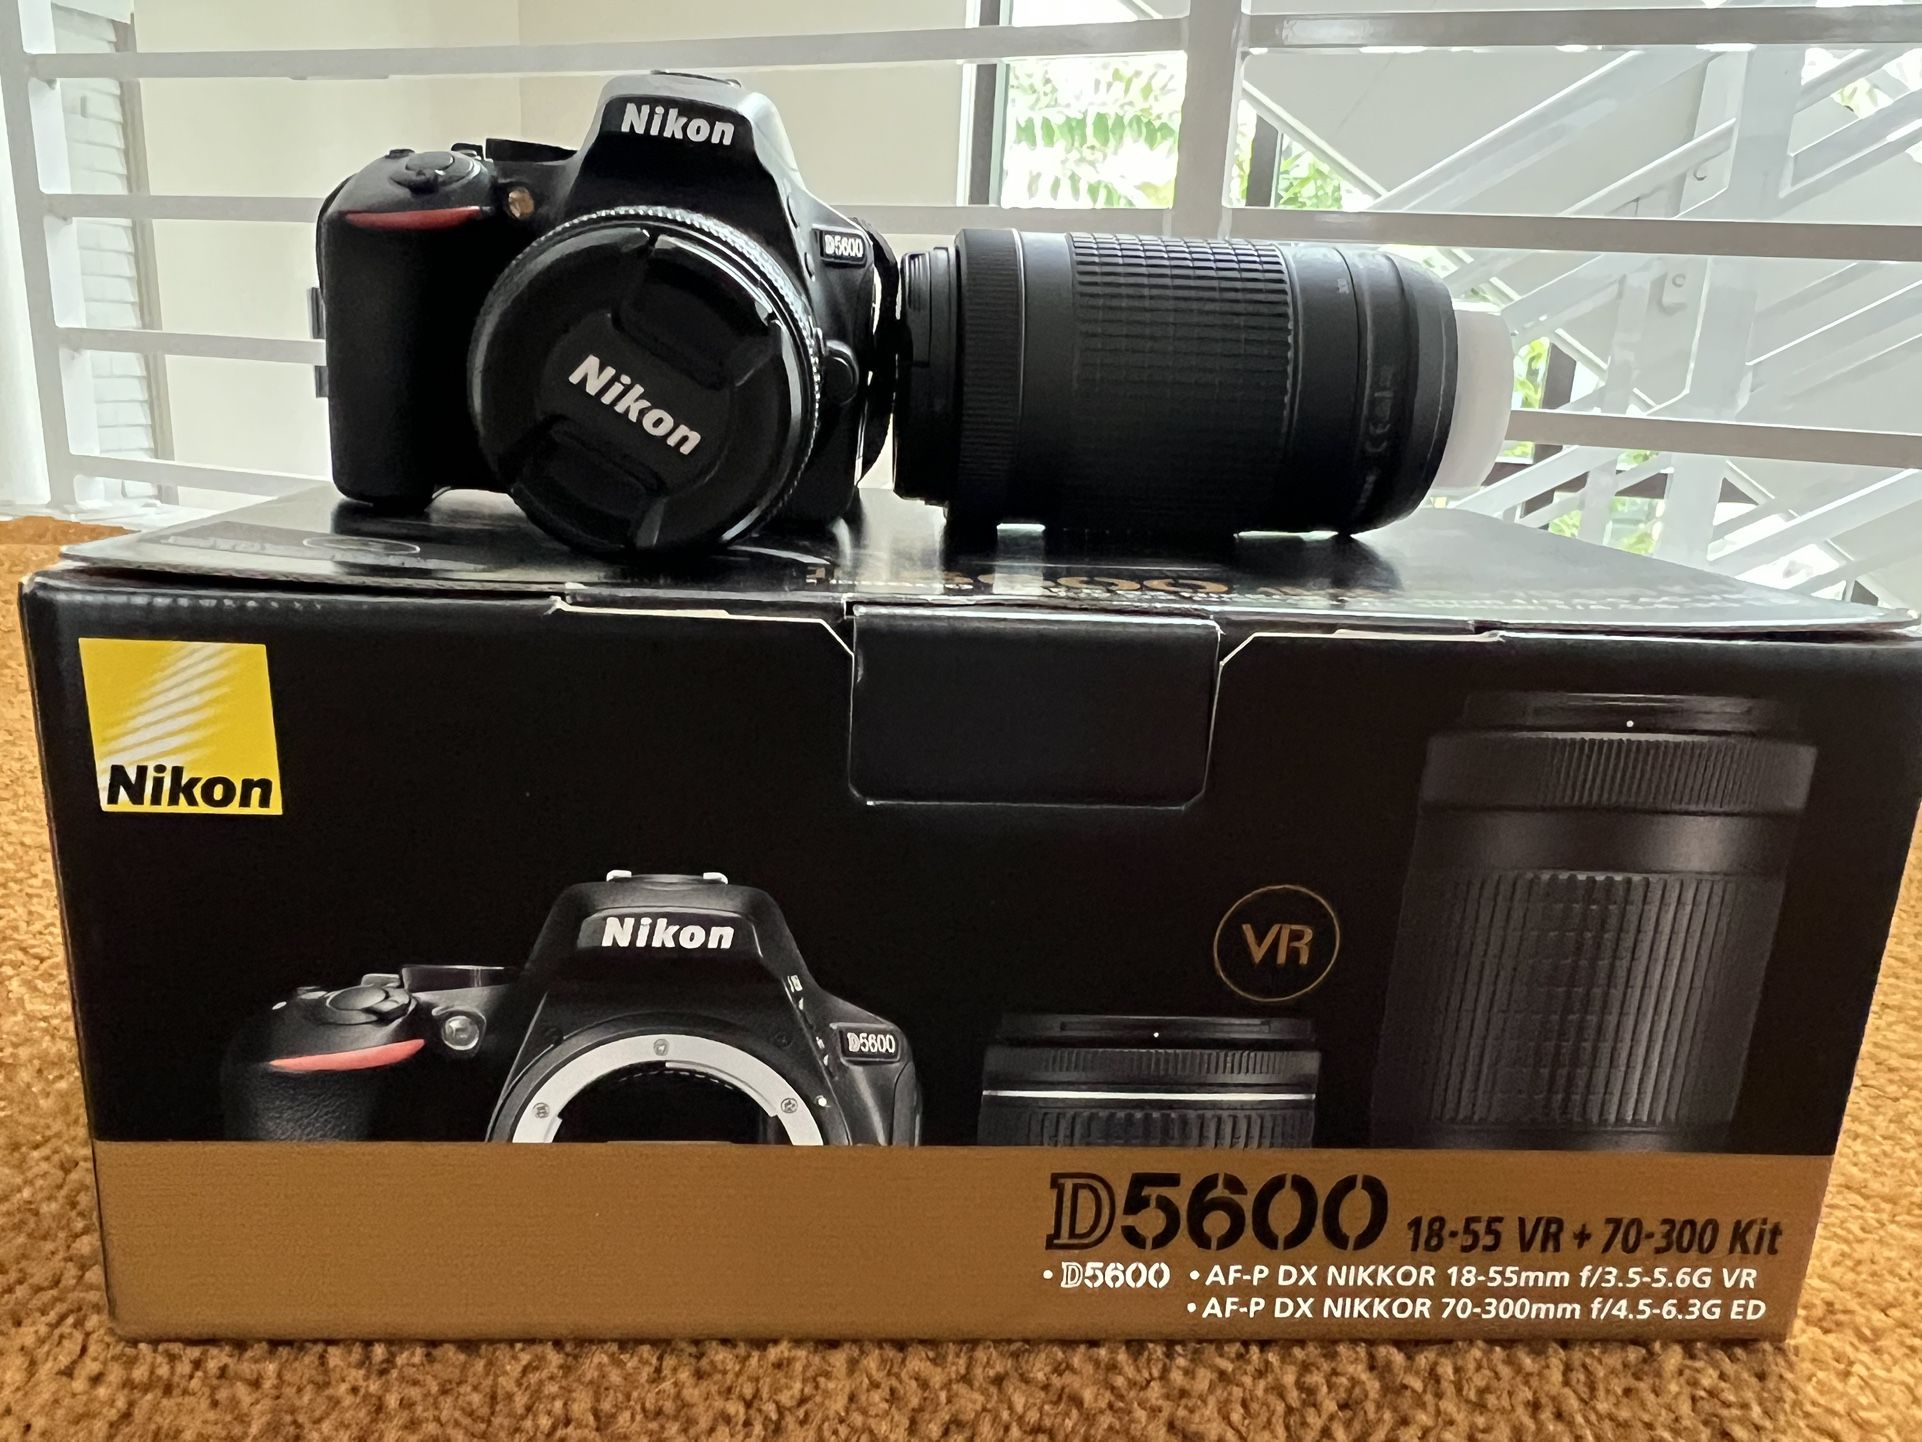 Nikon - D5600 DSLR Video Two Lens Kit with 18-55mm and 70-300mm Lenses - Black